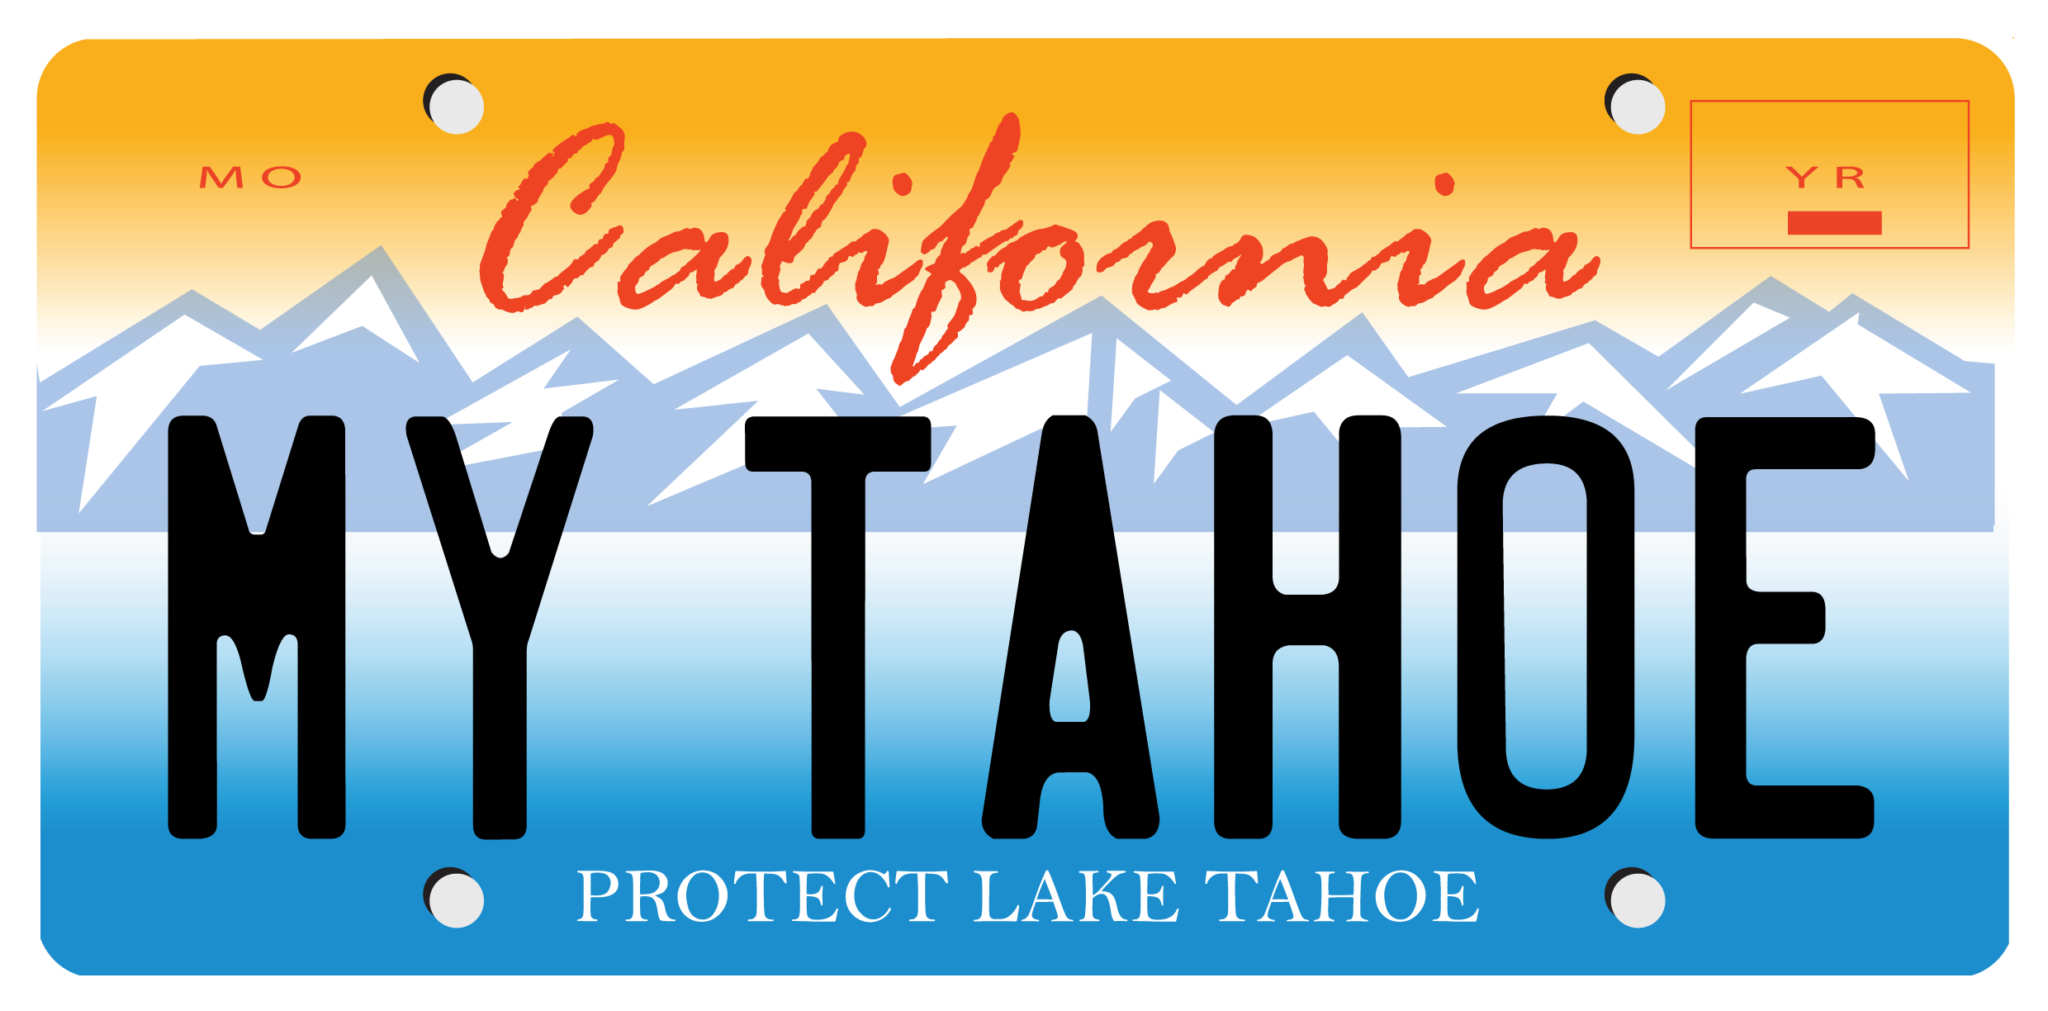 Mountain biker holding Lake Tahoe license plate